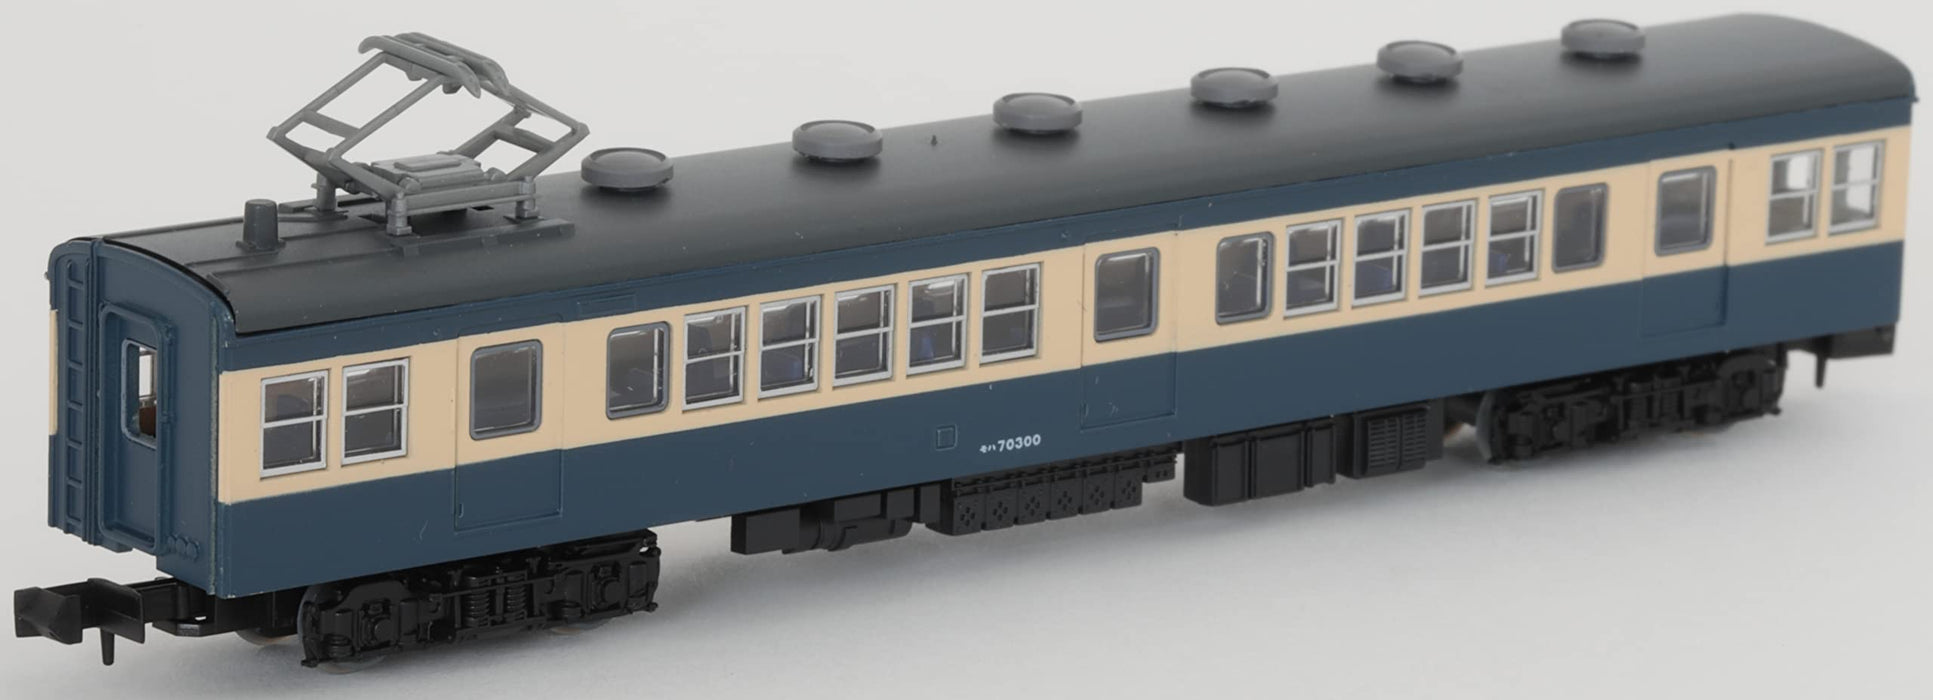 Tomytec Japan Railway Collection Jnr Series 70 Ryomo Line 4 Ensemble de voitures Diorama Fournitures Bleu 316435